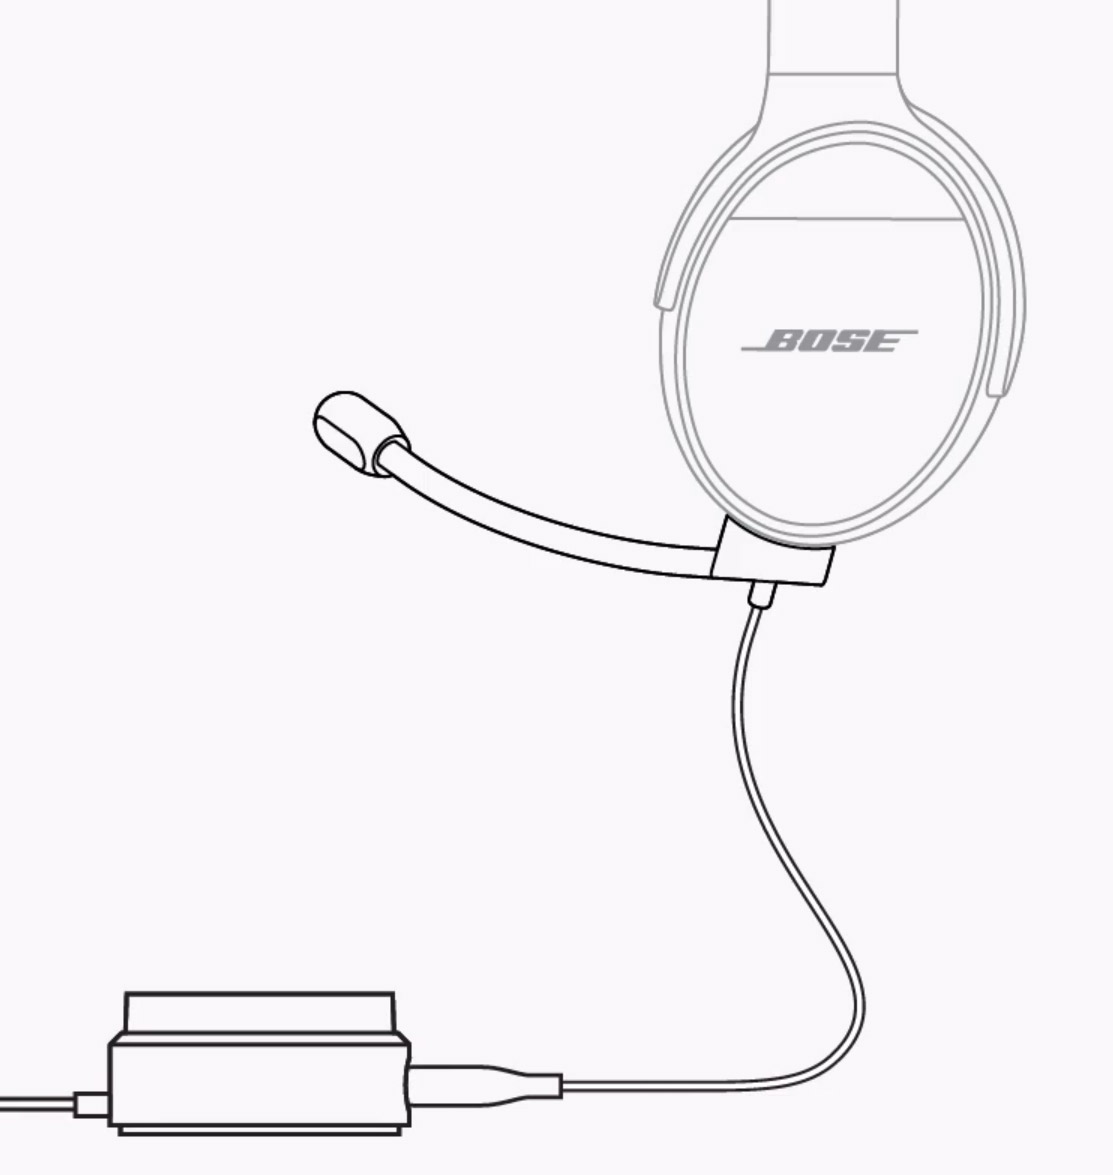 Bose QuietComfort 35 II Gaming Headset leak